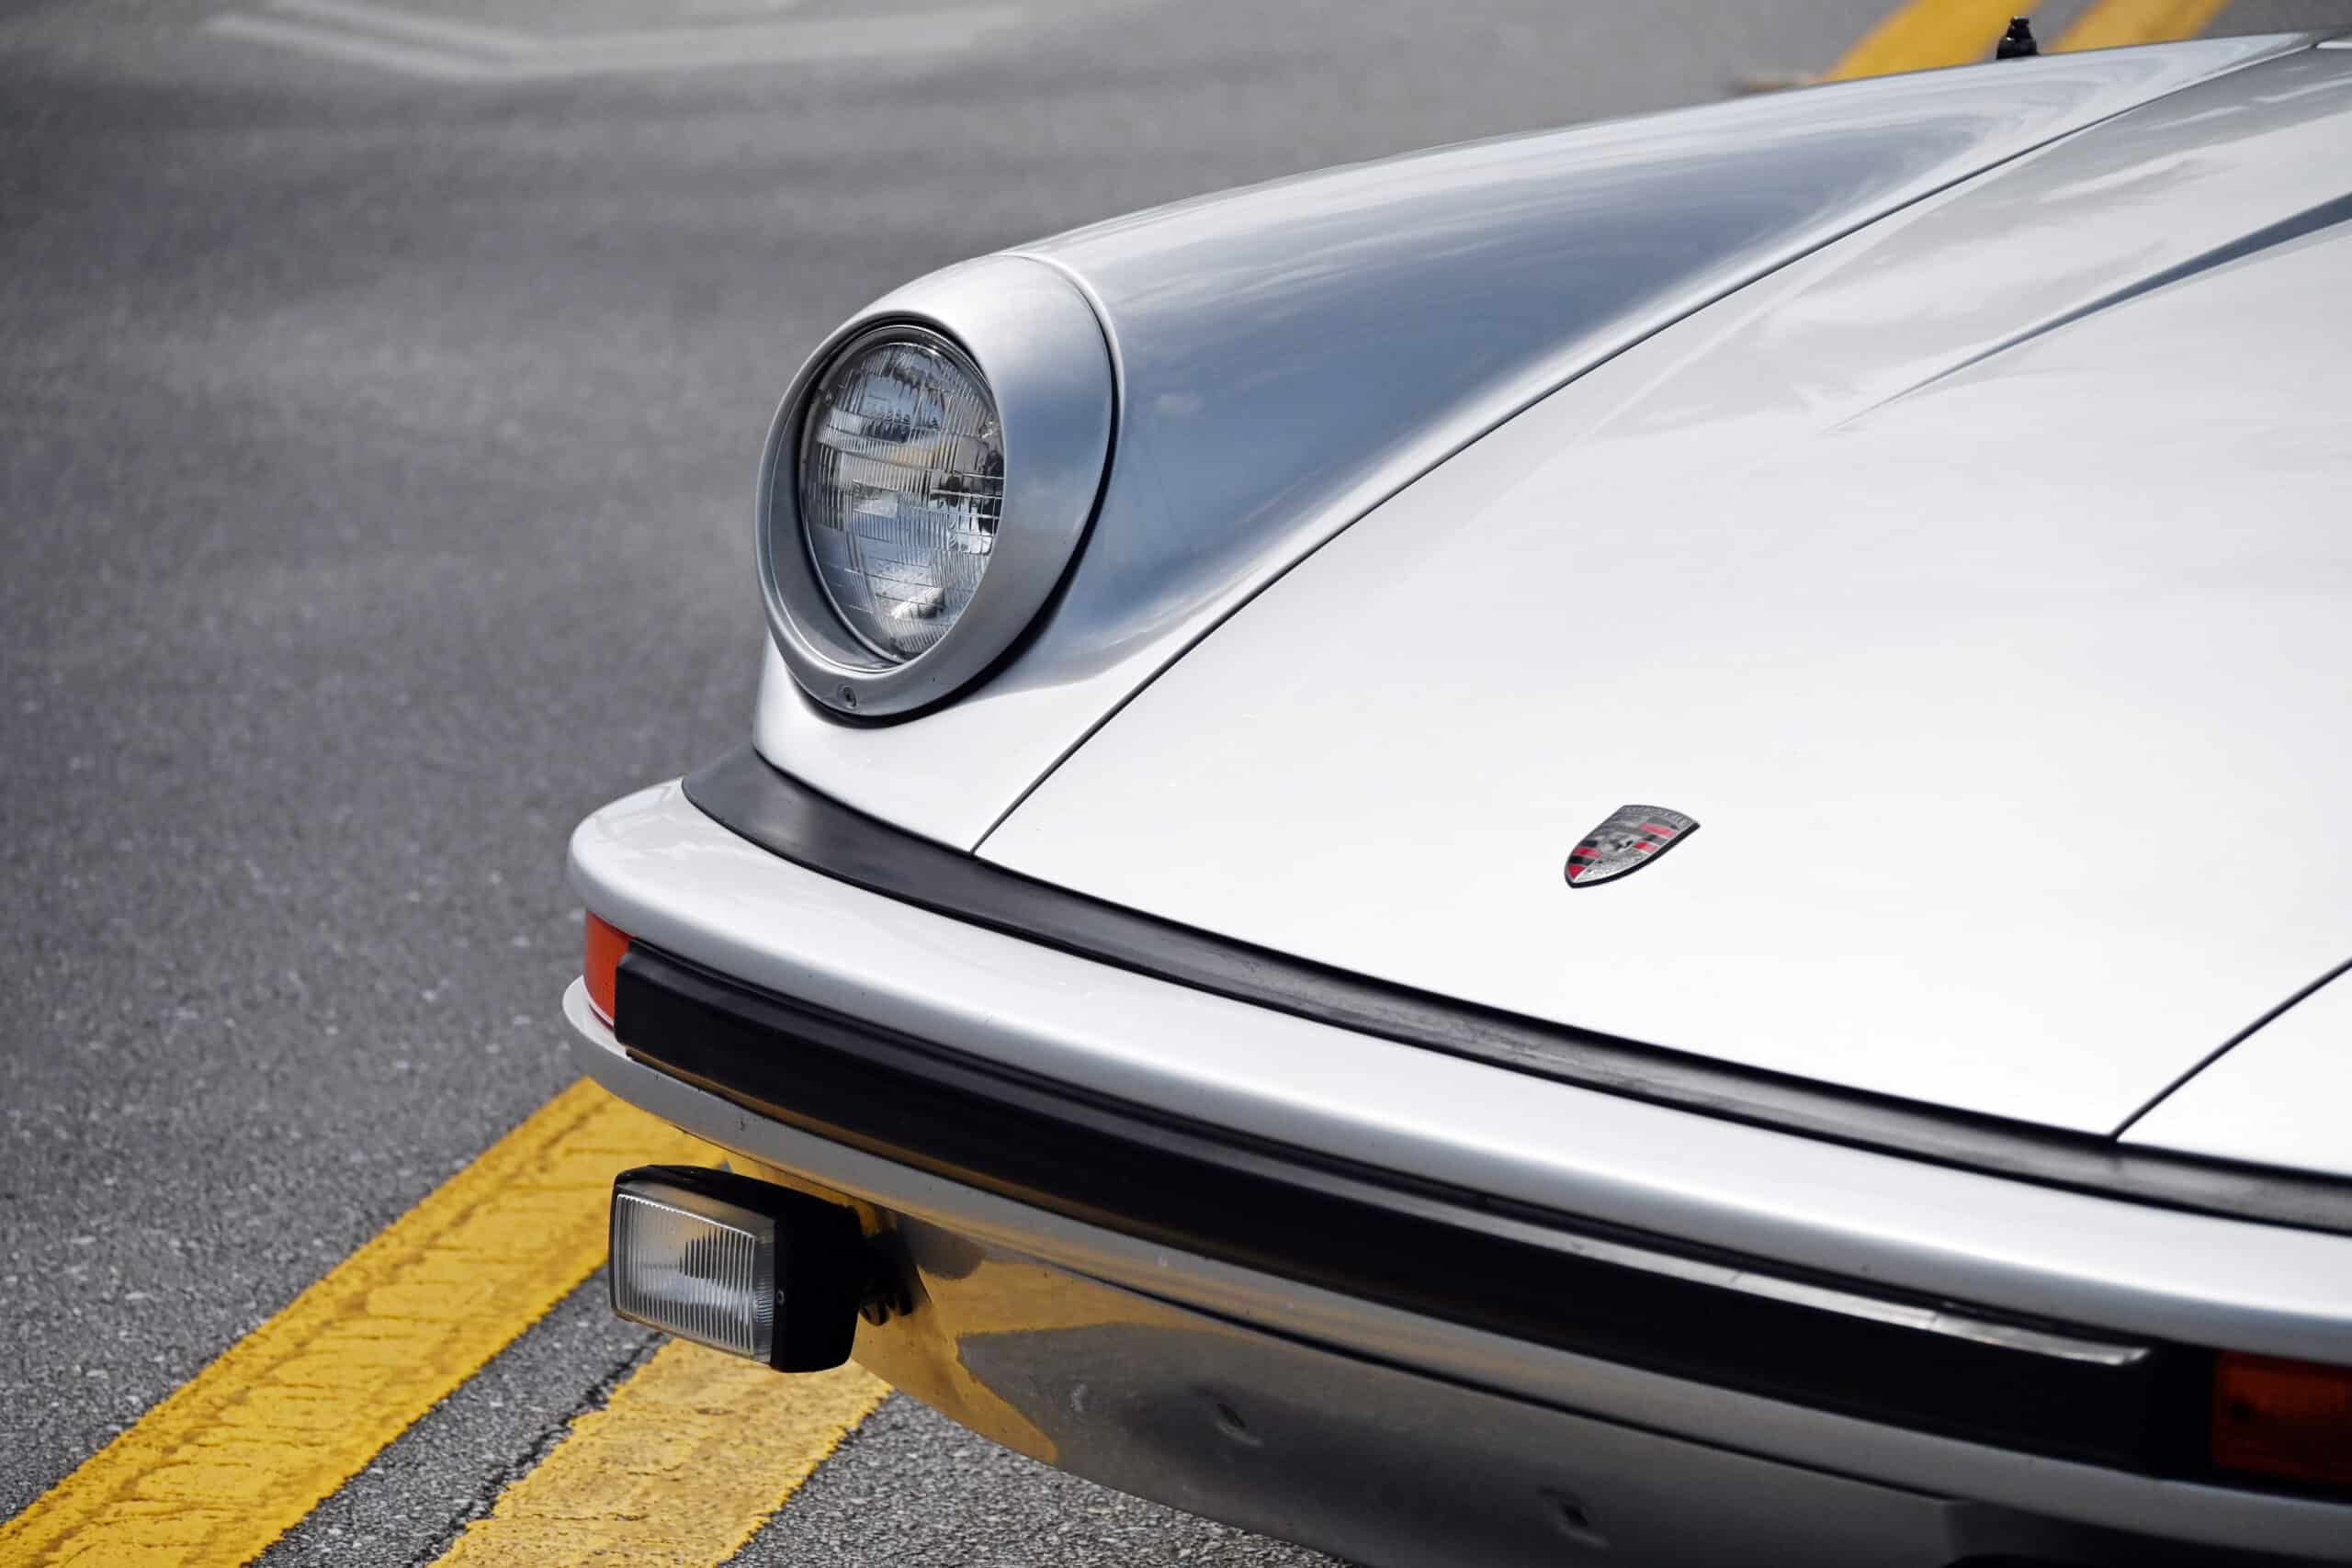 1979 Porsche 911 SC, only 79K miles since new, California car, 930 Turbo Fuchs, Desirable Silver Metallic, Rust Free